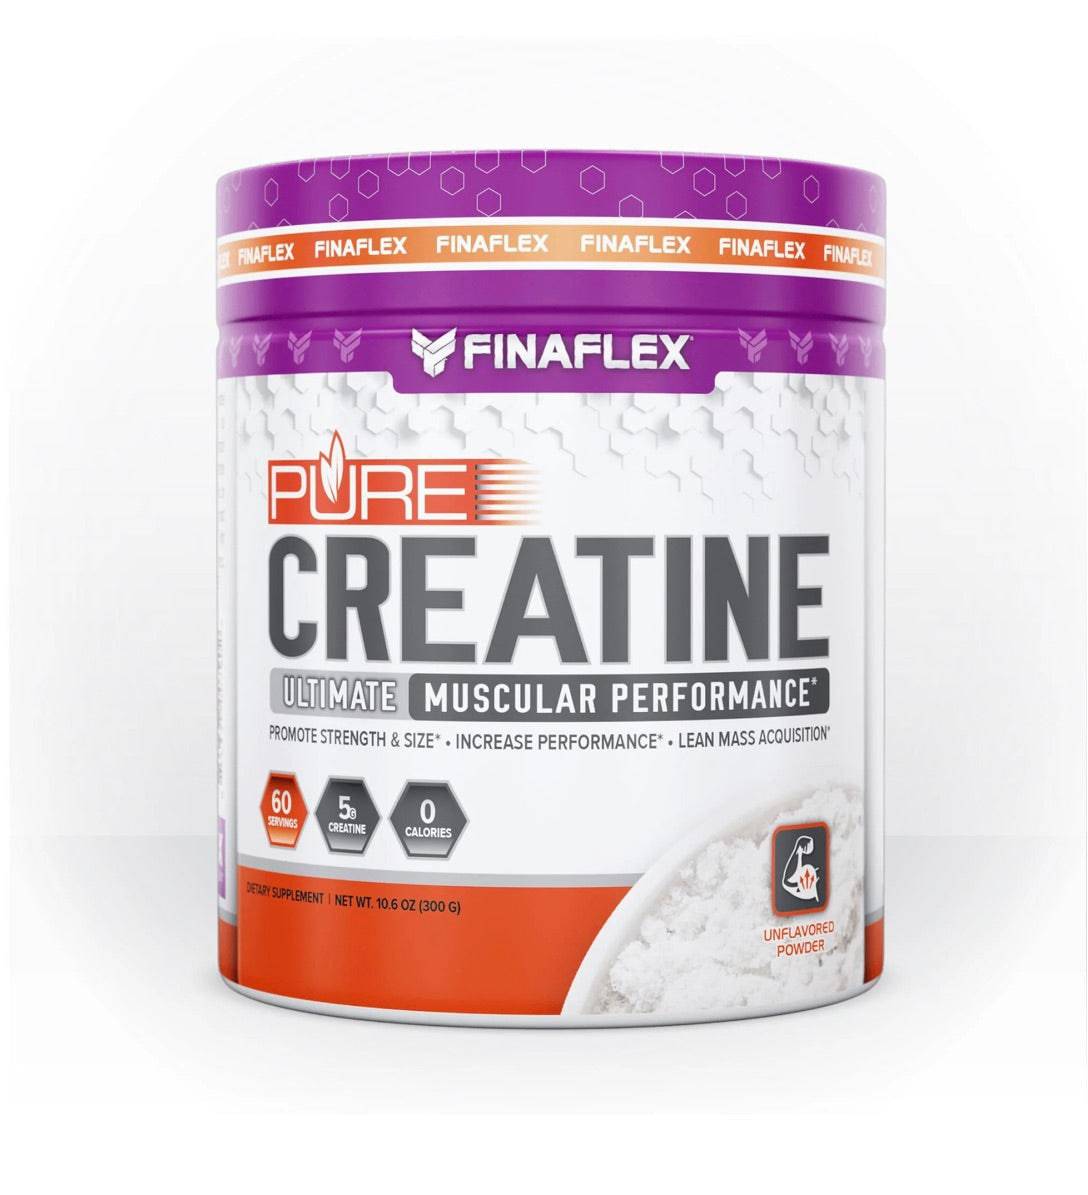 Pure Creatine - Finaflex - Prime Sports Nutrition